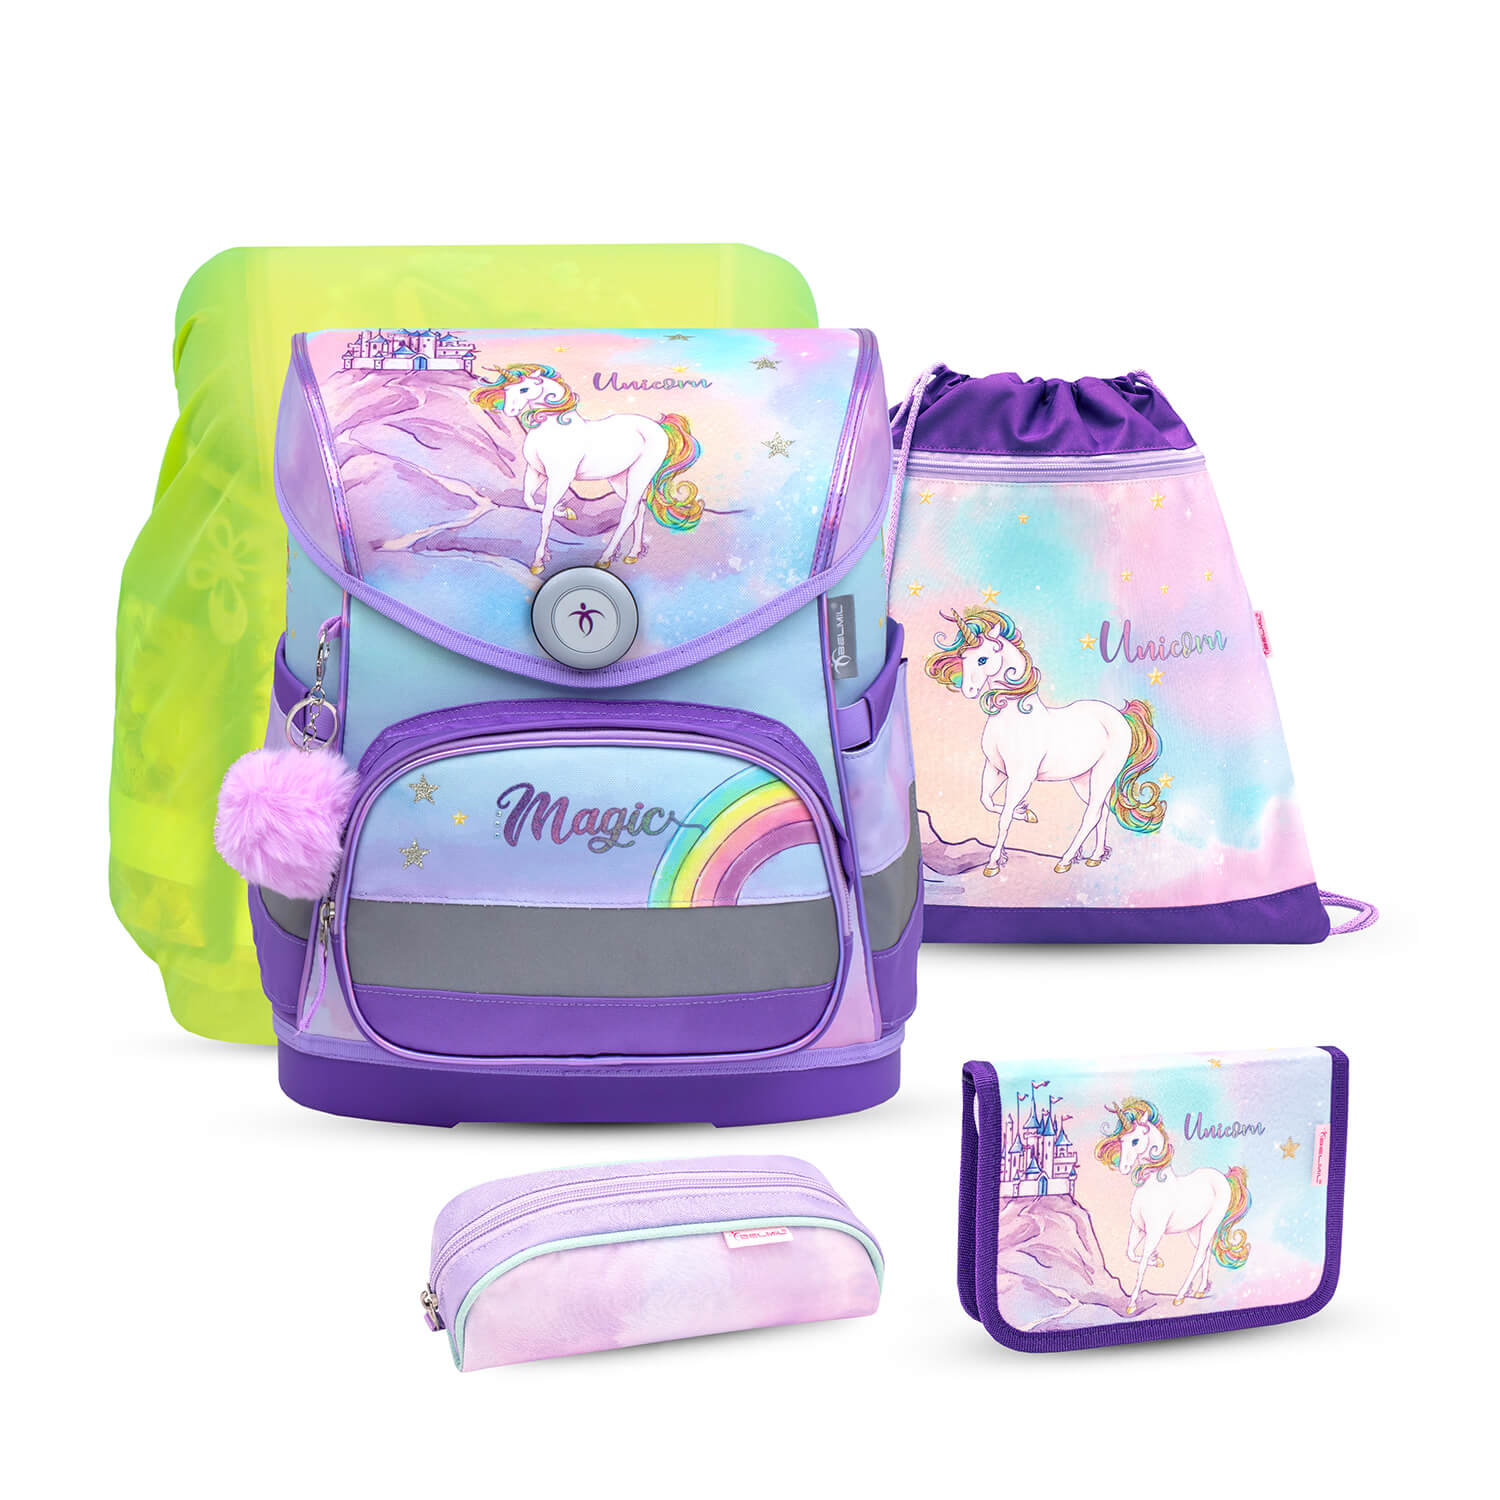 Compact Rainbow Unicorn Magic schoolbag set 5 pcs